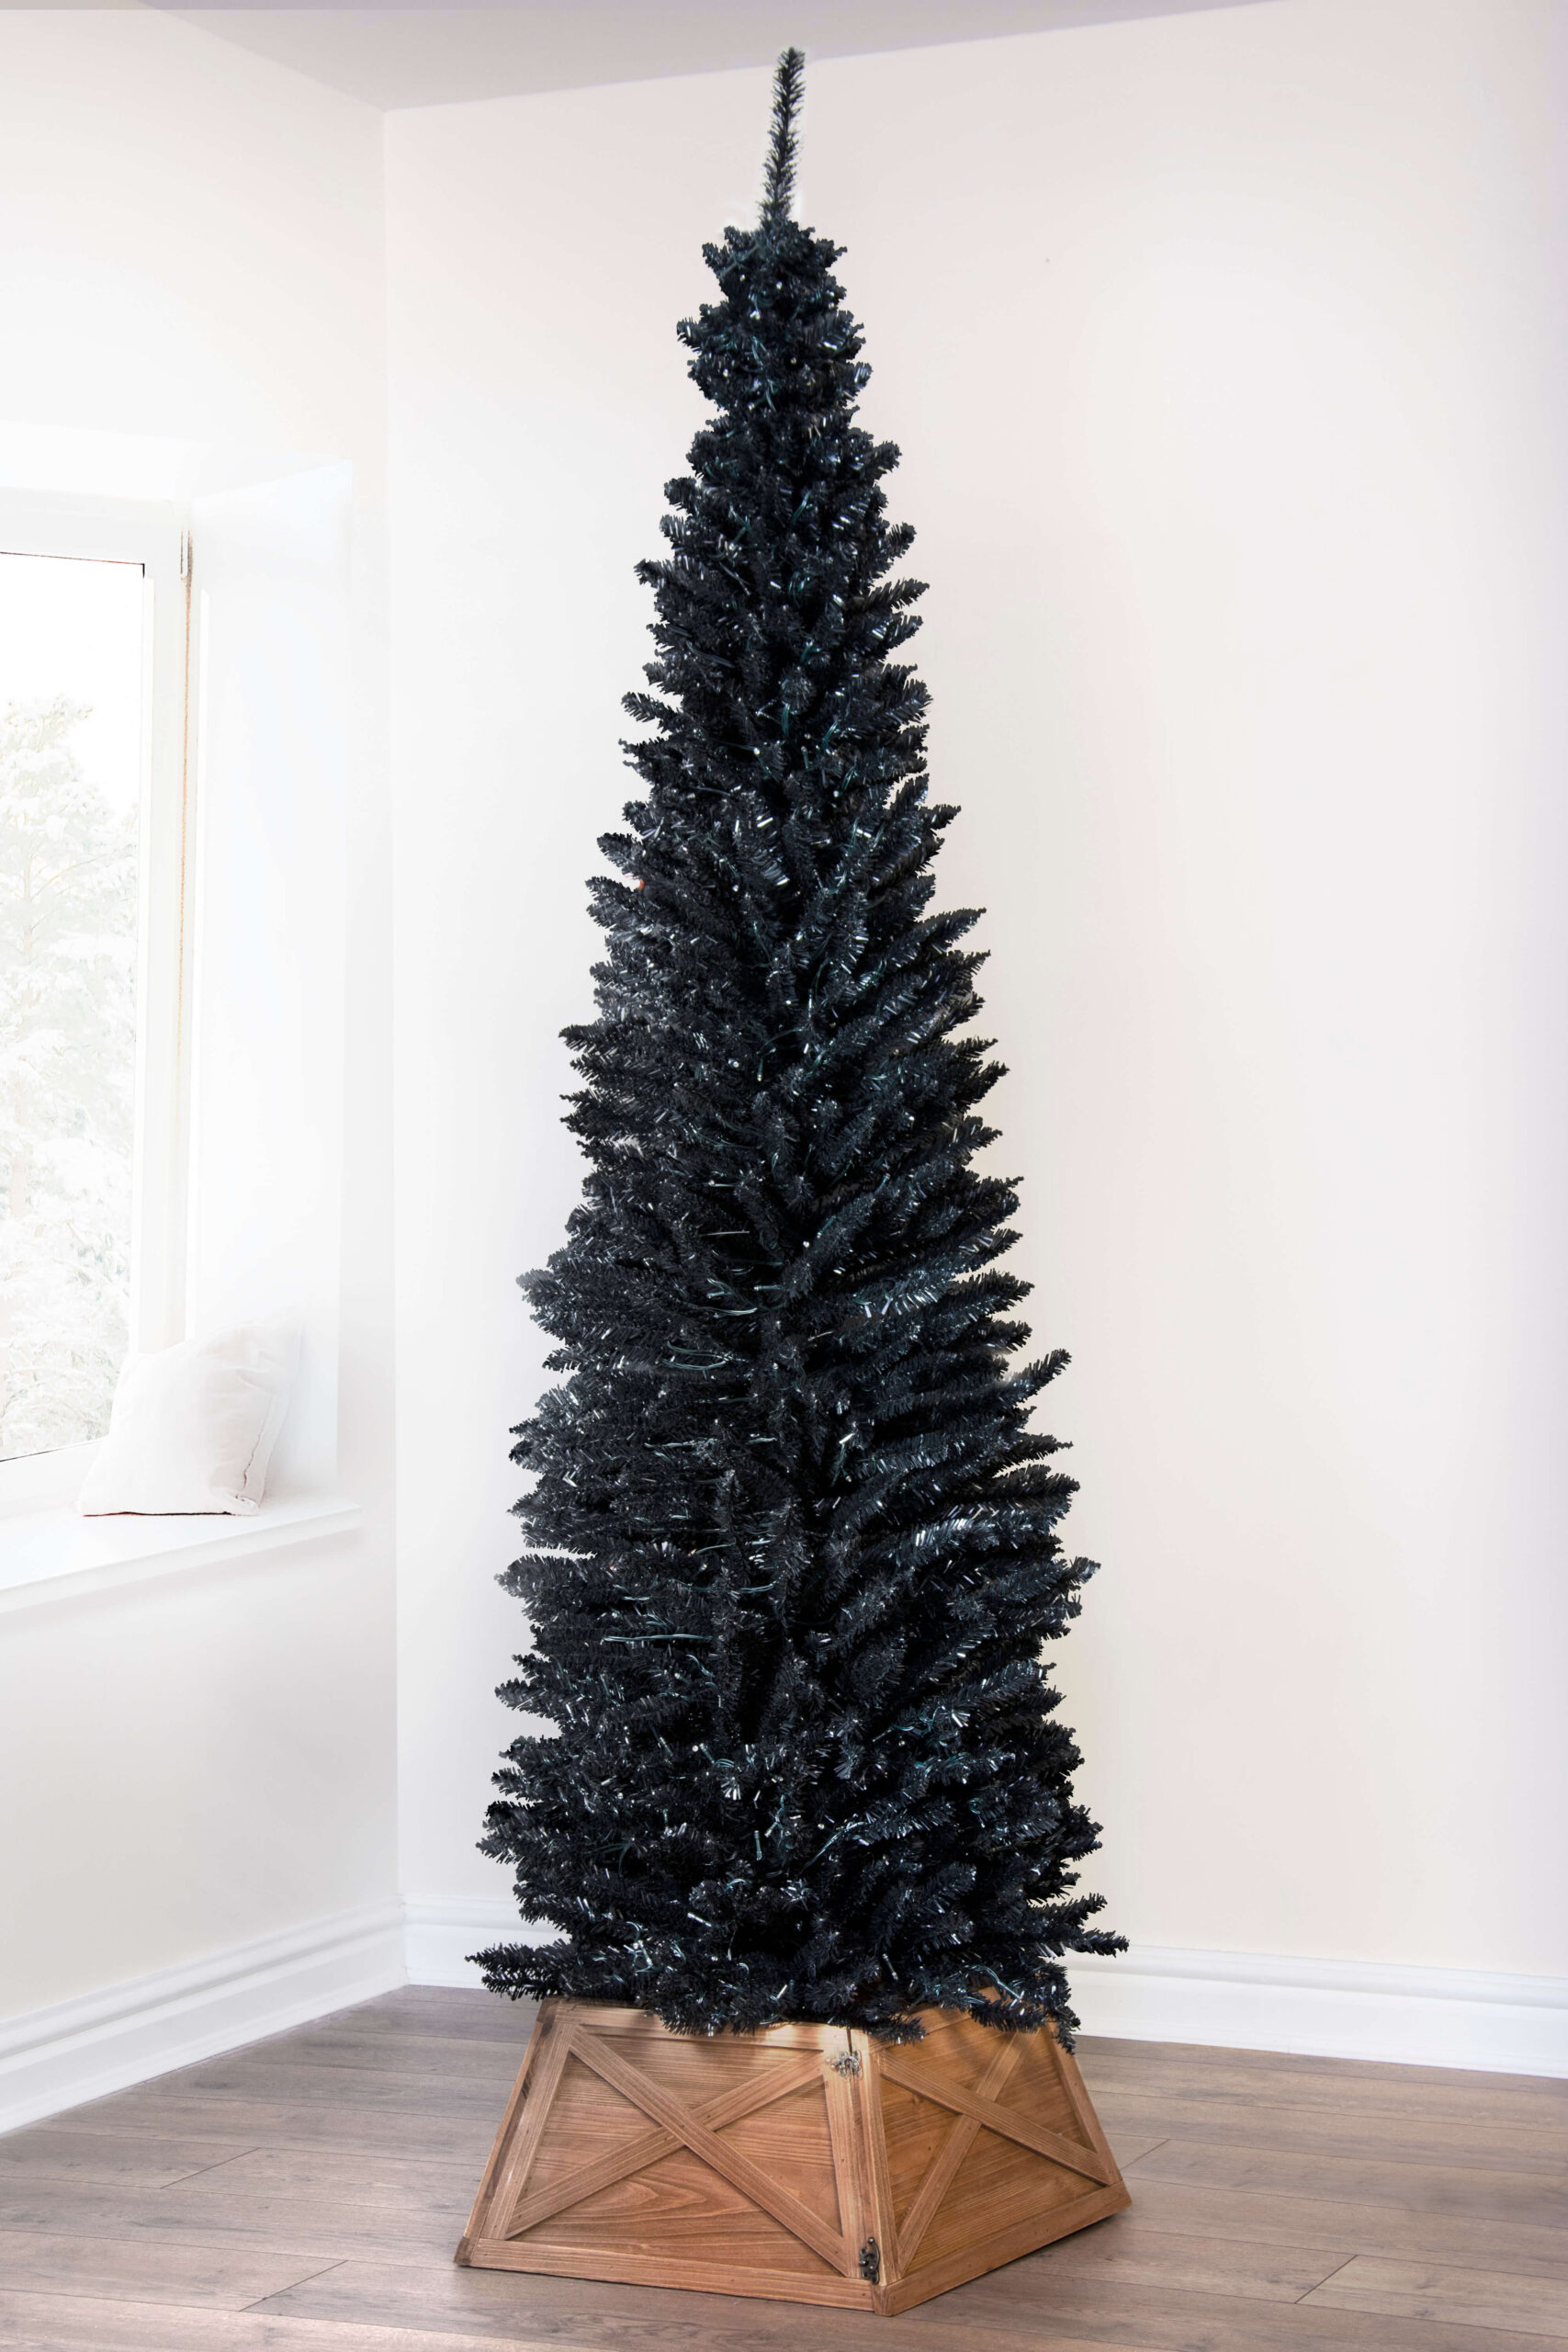 Where Can I Buy A Black Christmas Tree?